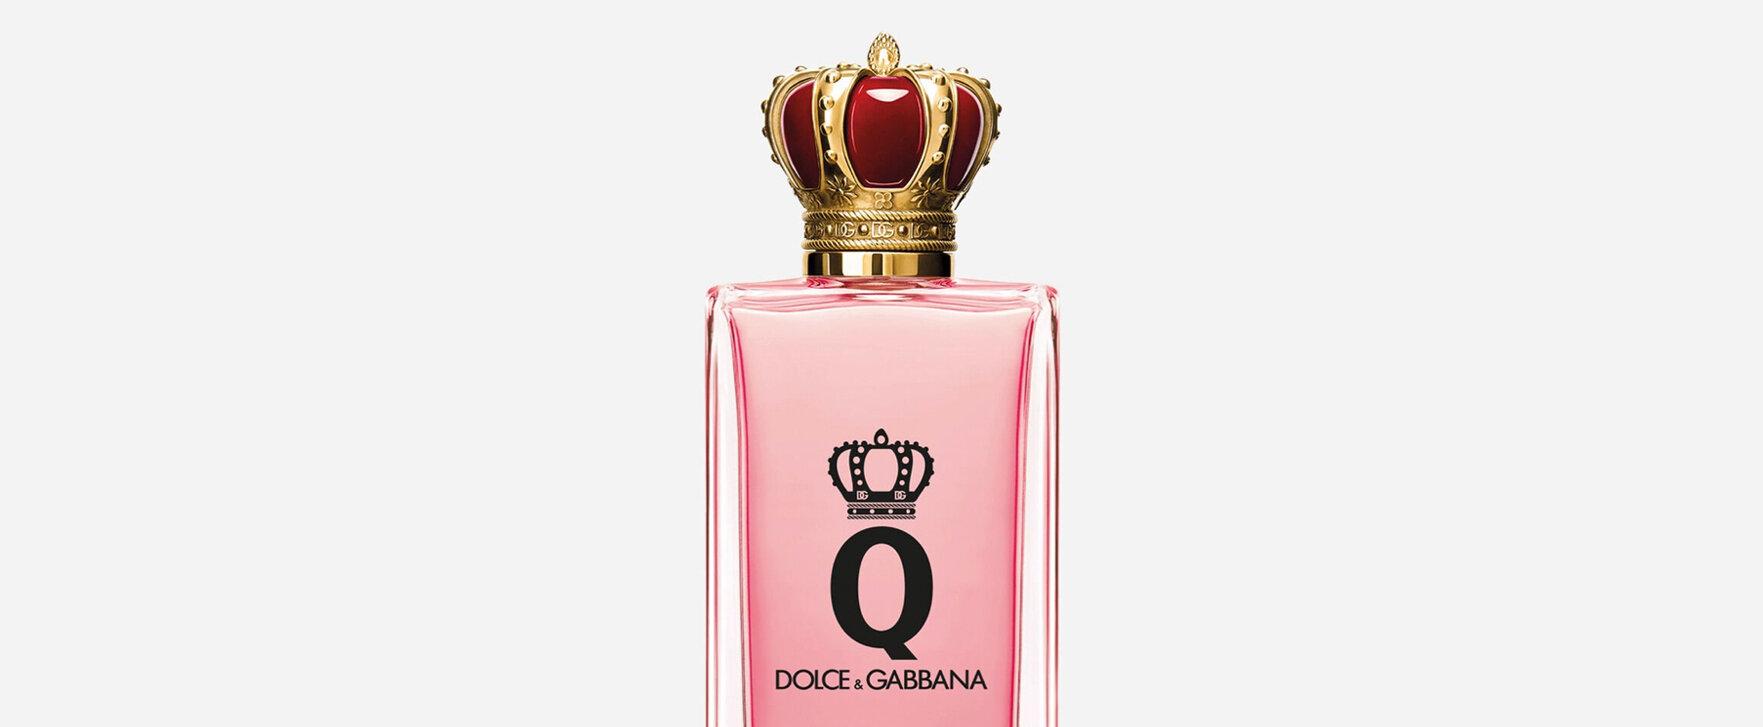 “Q” - Dolce & Gabbana Presents the Feminine Counterpart to the Men’s Fragrance